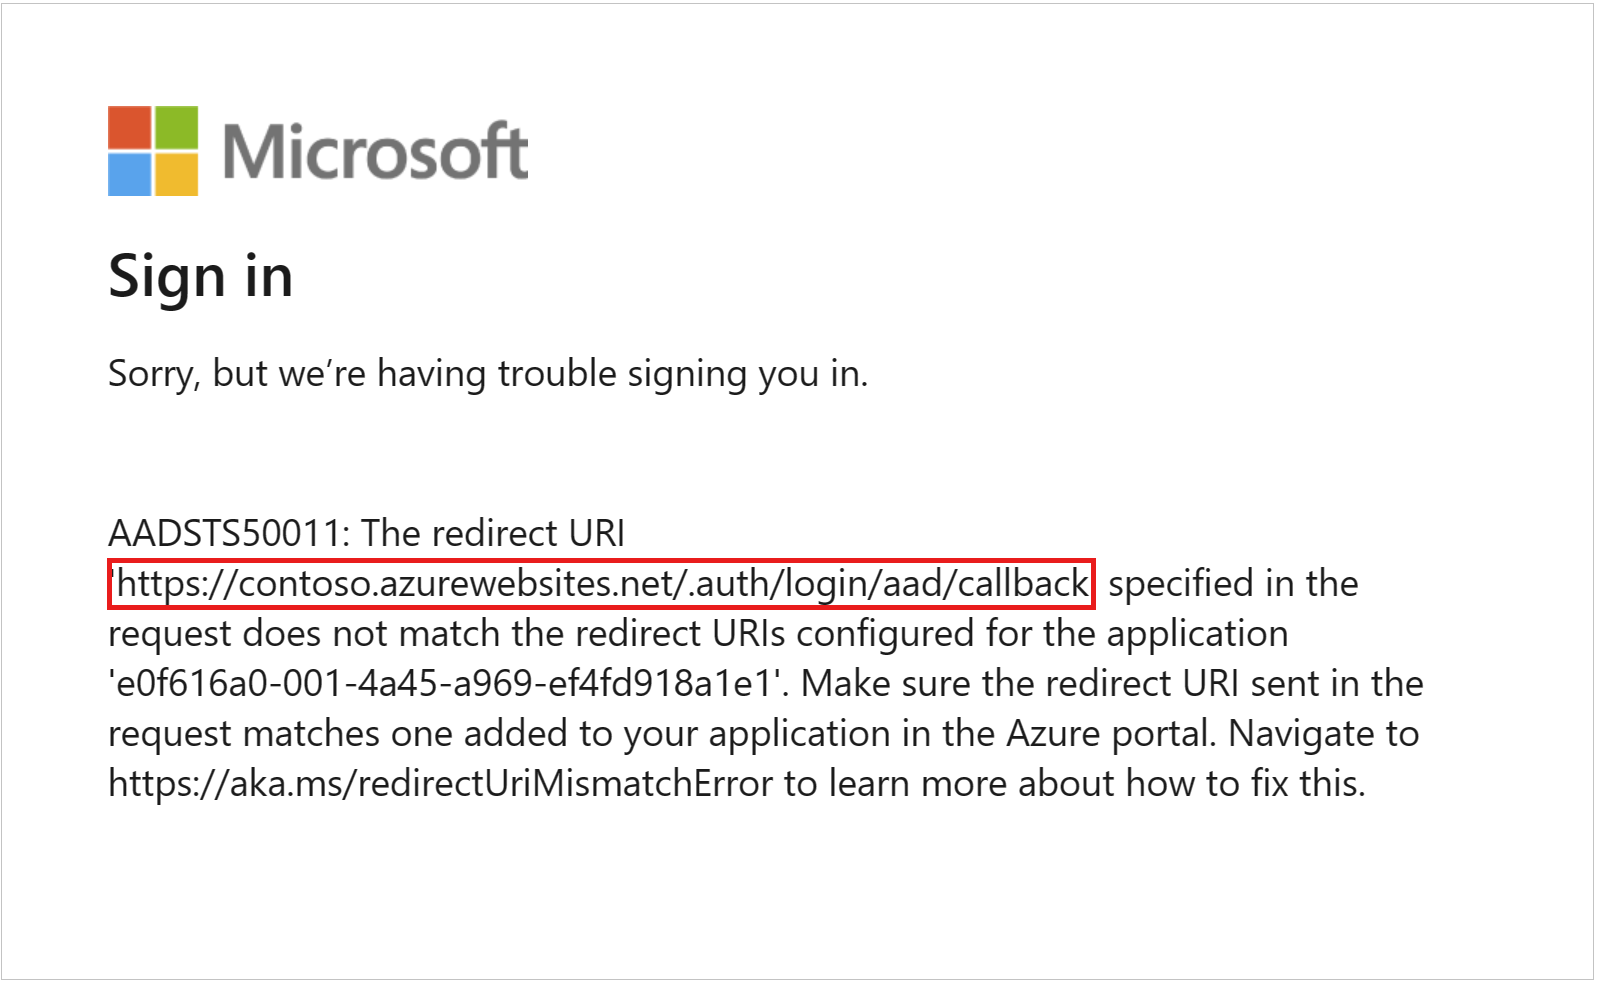 Microsoft error messages